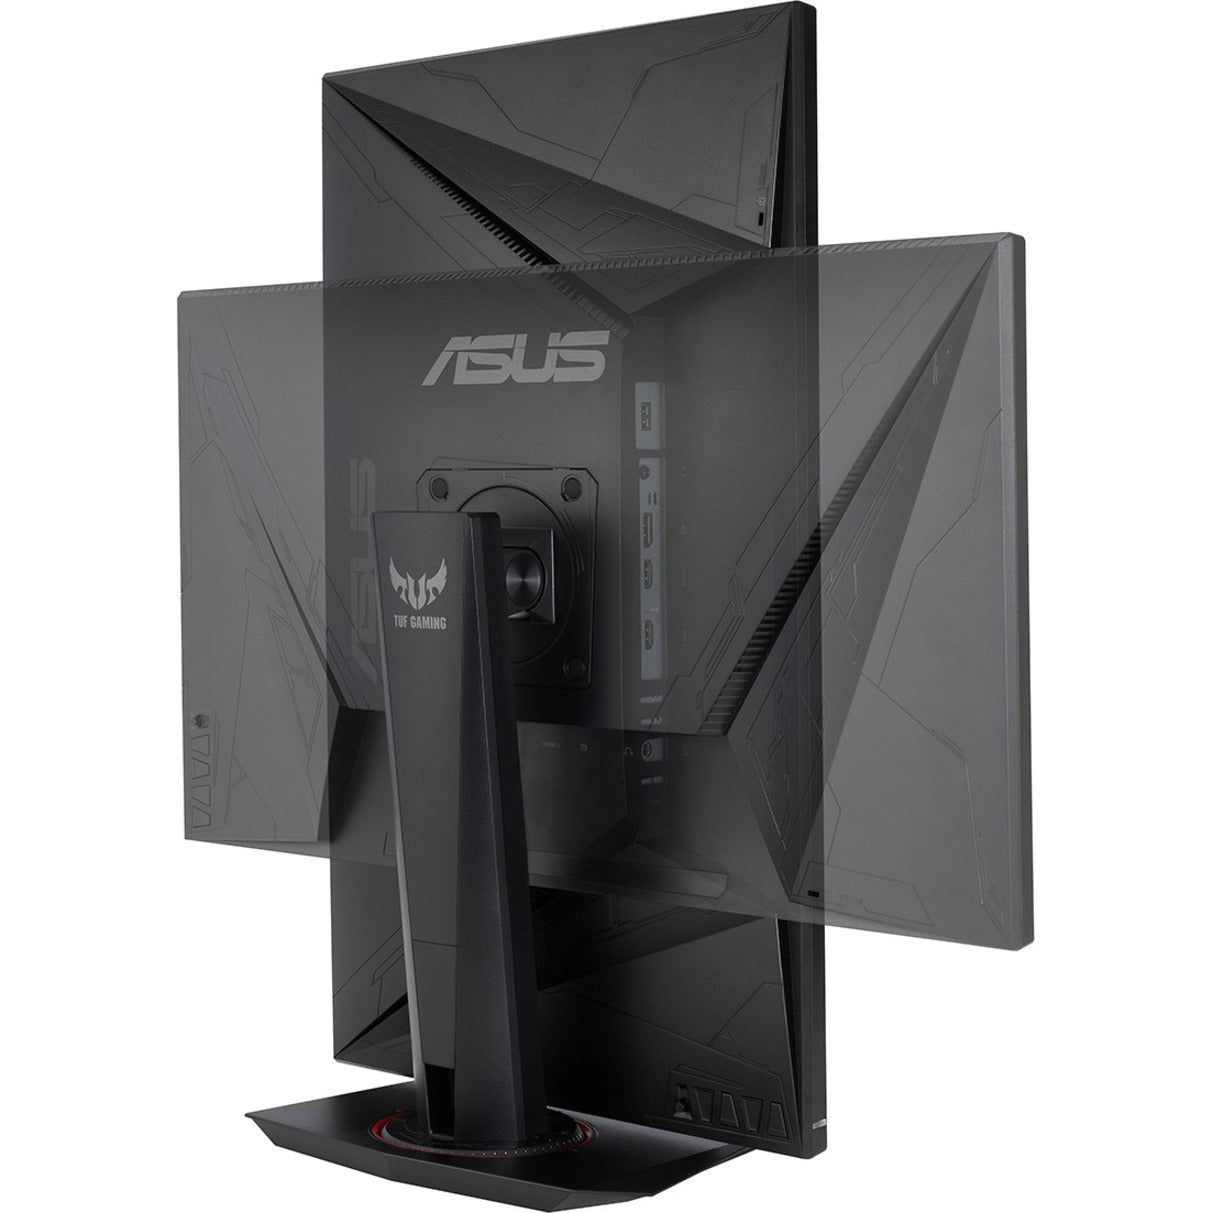 Asus 技嘉 VG279QM 27英寸全高清游戏液晶显示器 - 黑色 国行正品【下架】